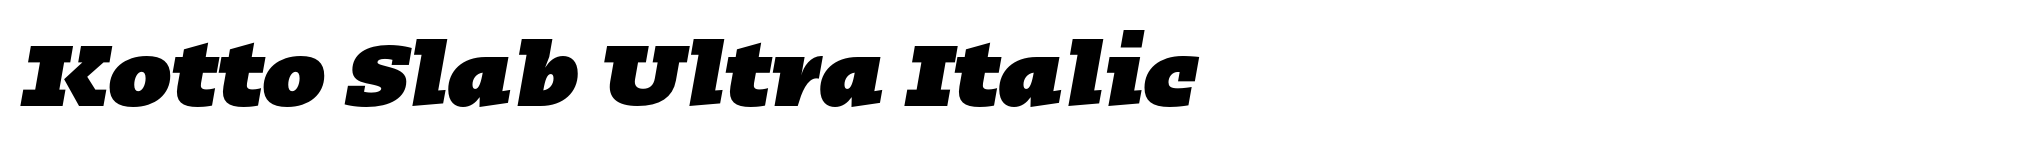 Kotto Slab Ultra Italic image